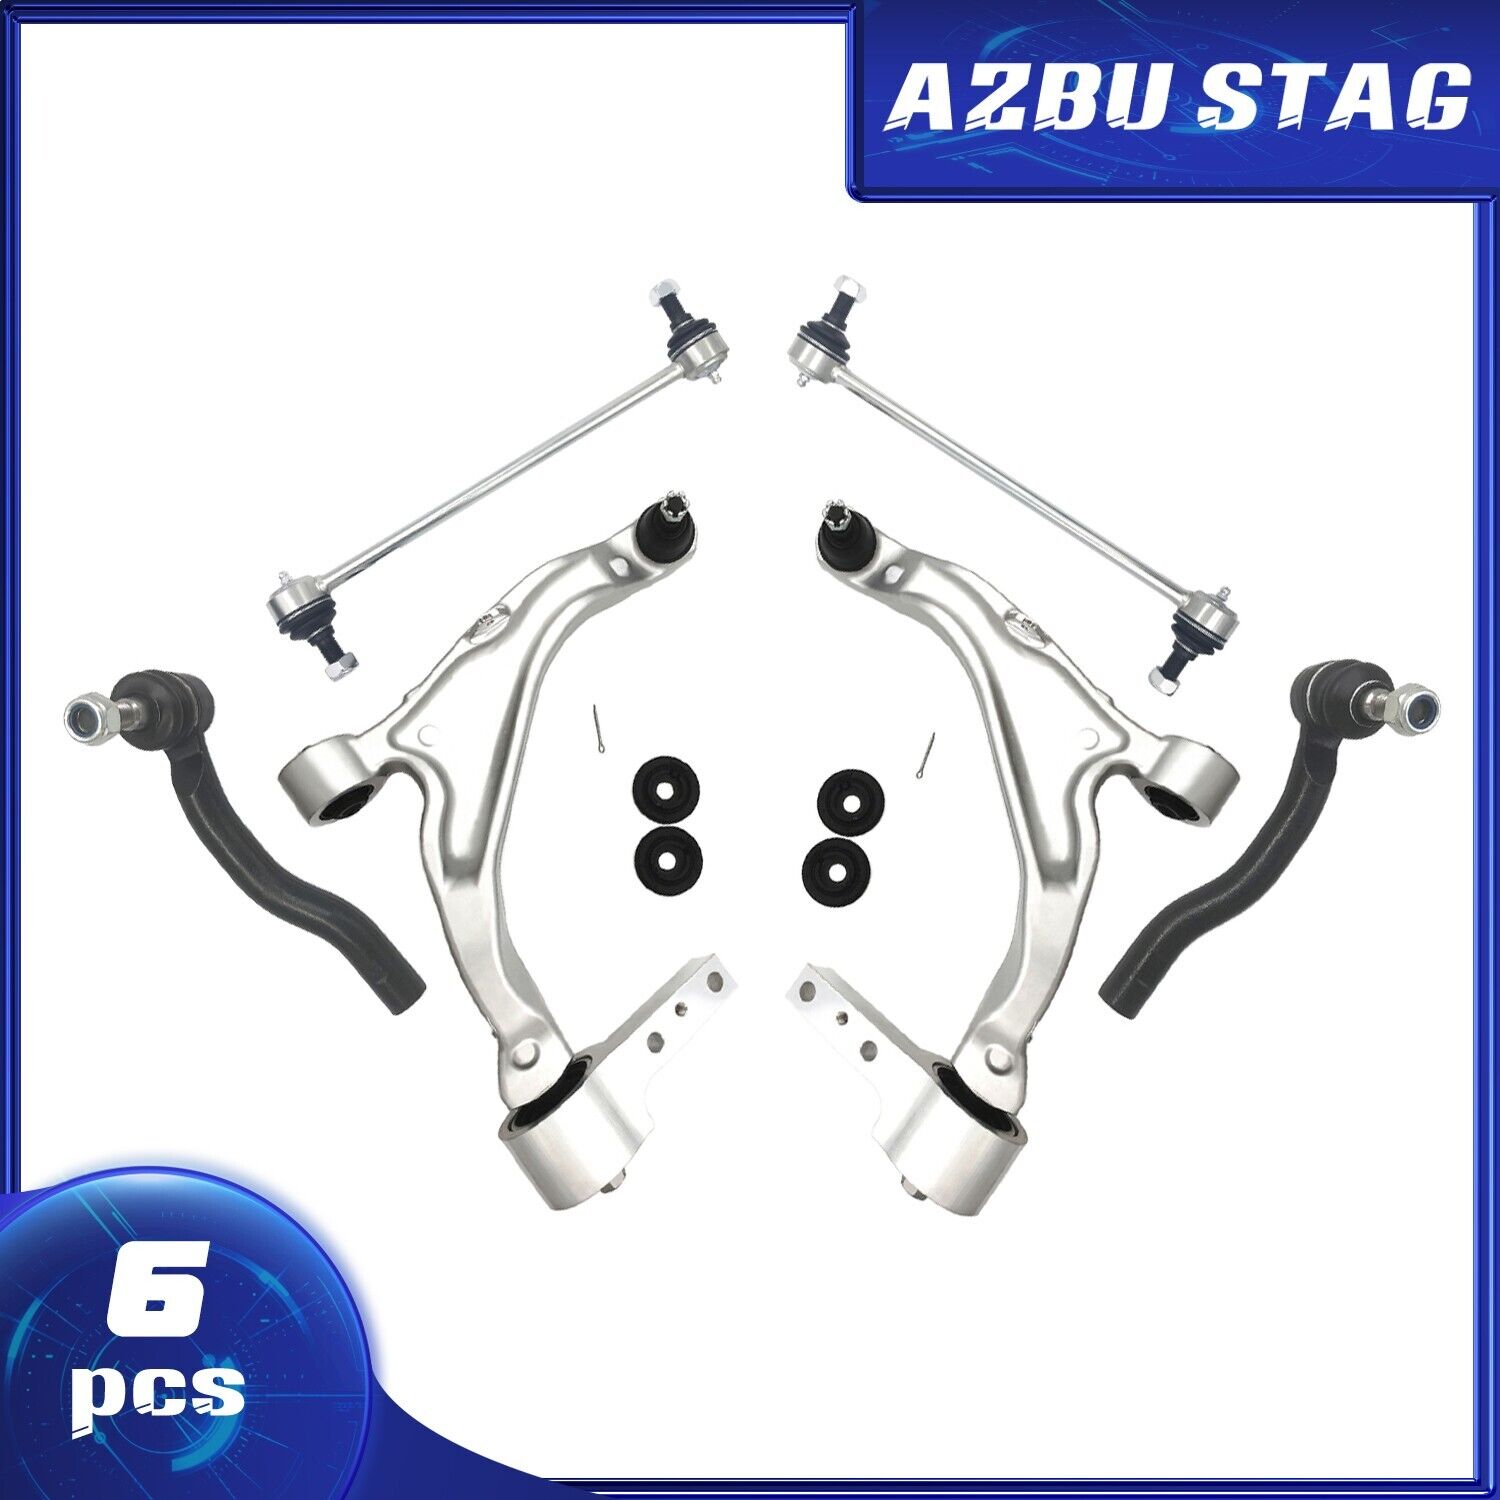 AzbuStag Control Arm Kit for 2007-2013 Acura MDX 2010-2013 Acura ZDX - 6Pcs